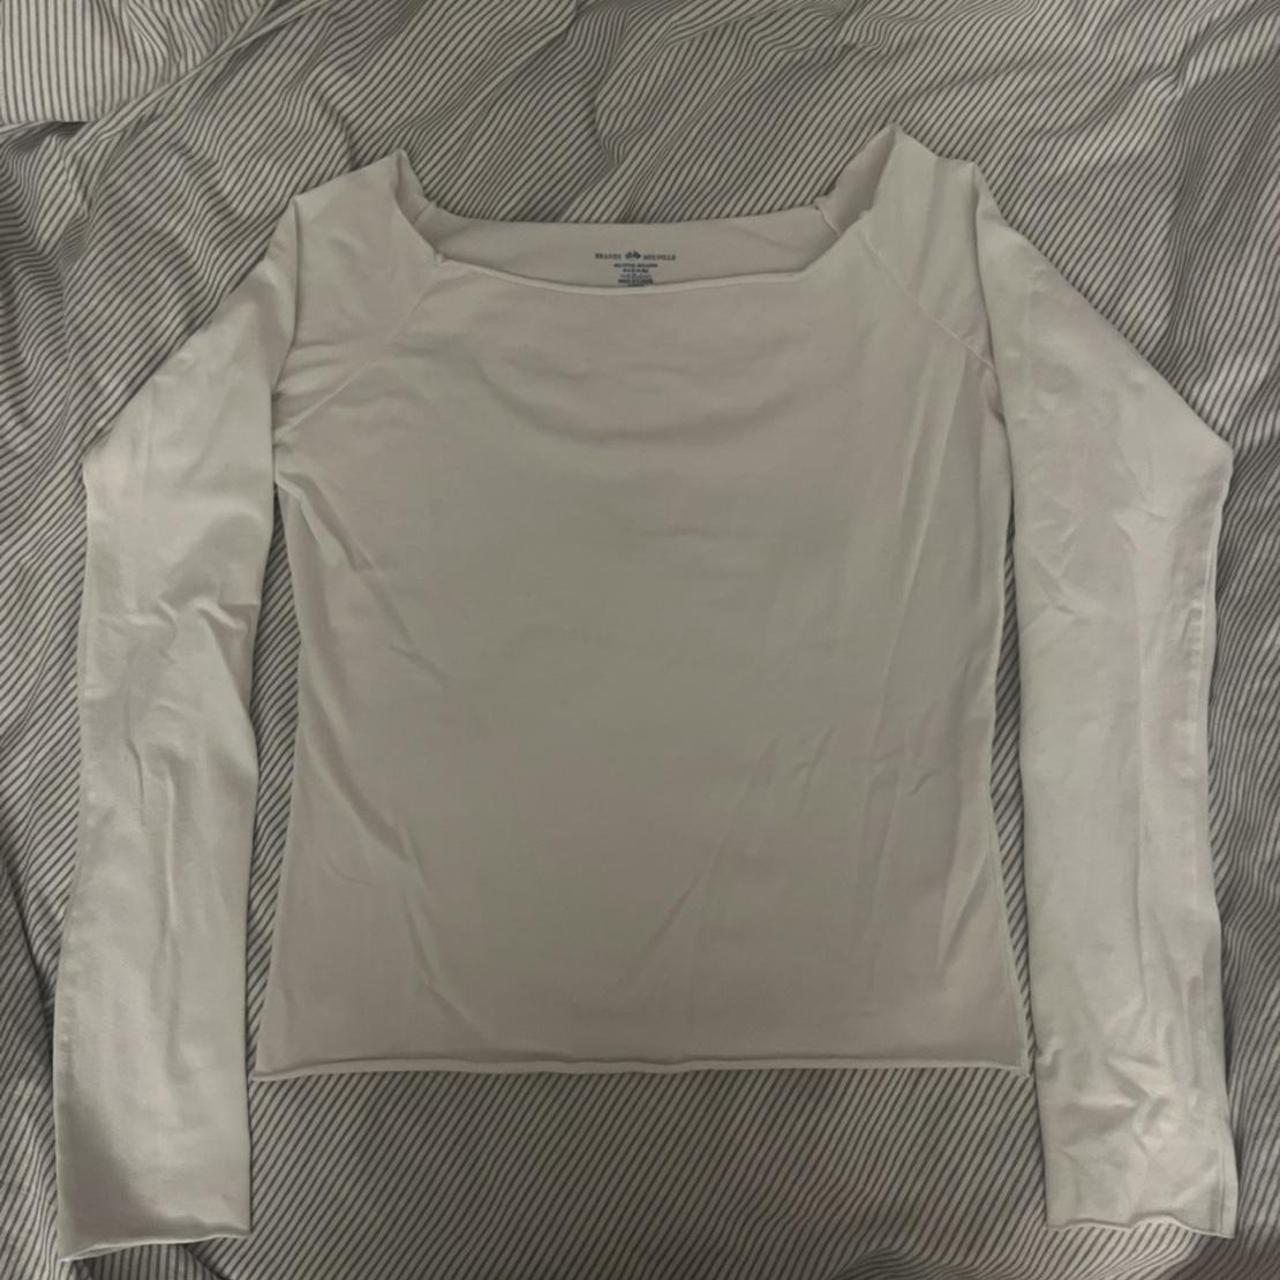 Brandy Melville White Shirt | Depop